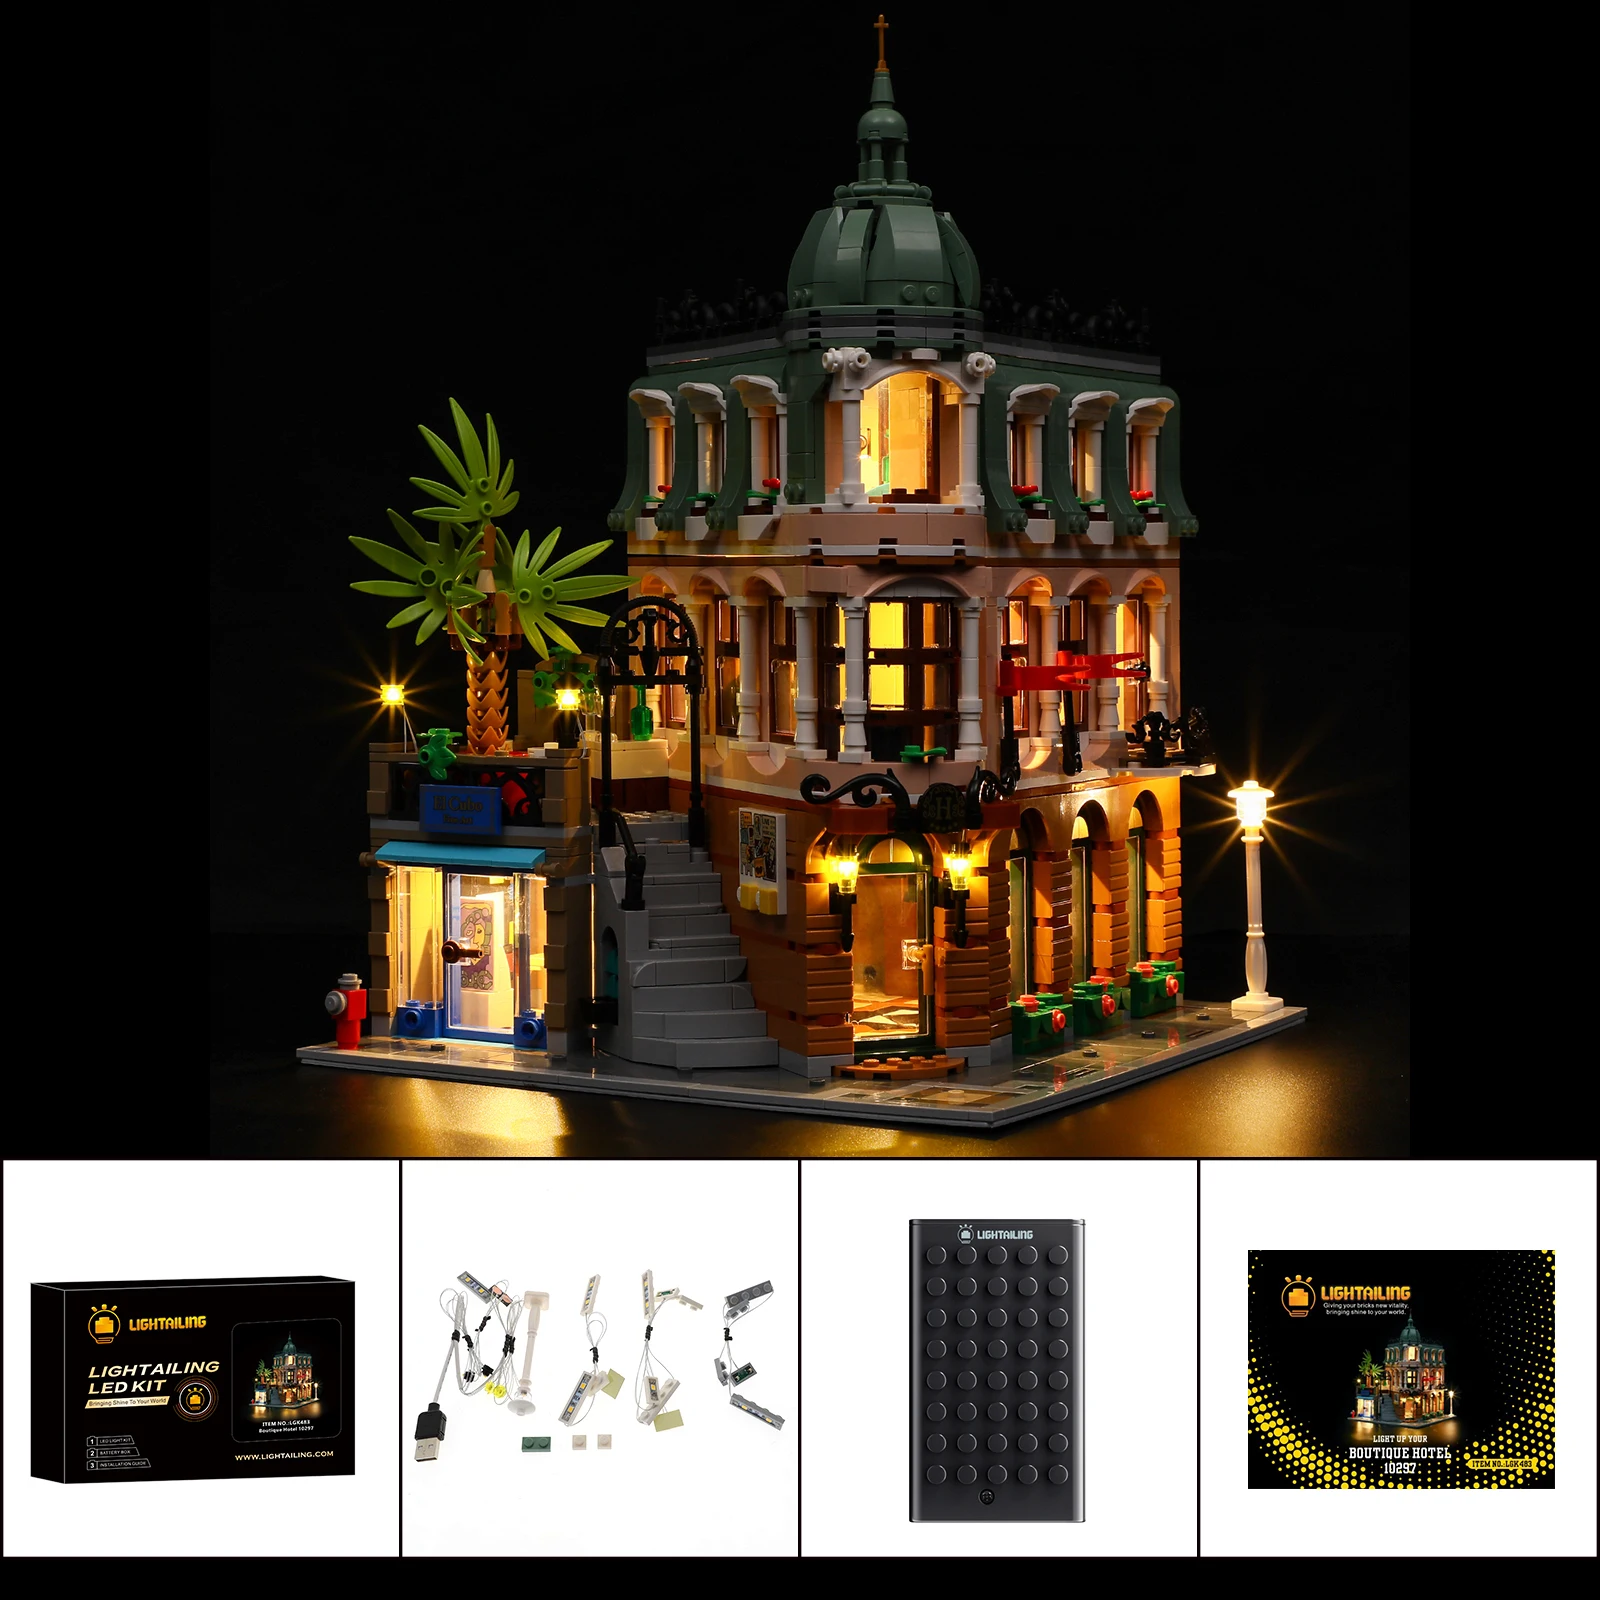 LIGHTAILING LED Light Kit for 10297 Boutique Hotel Toy Lighting Set